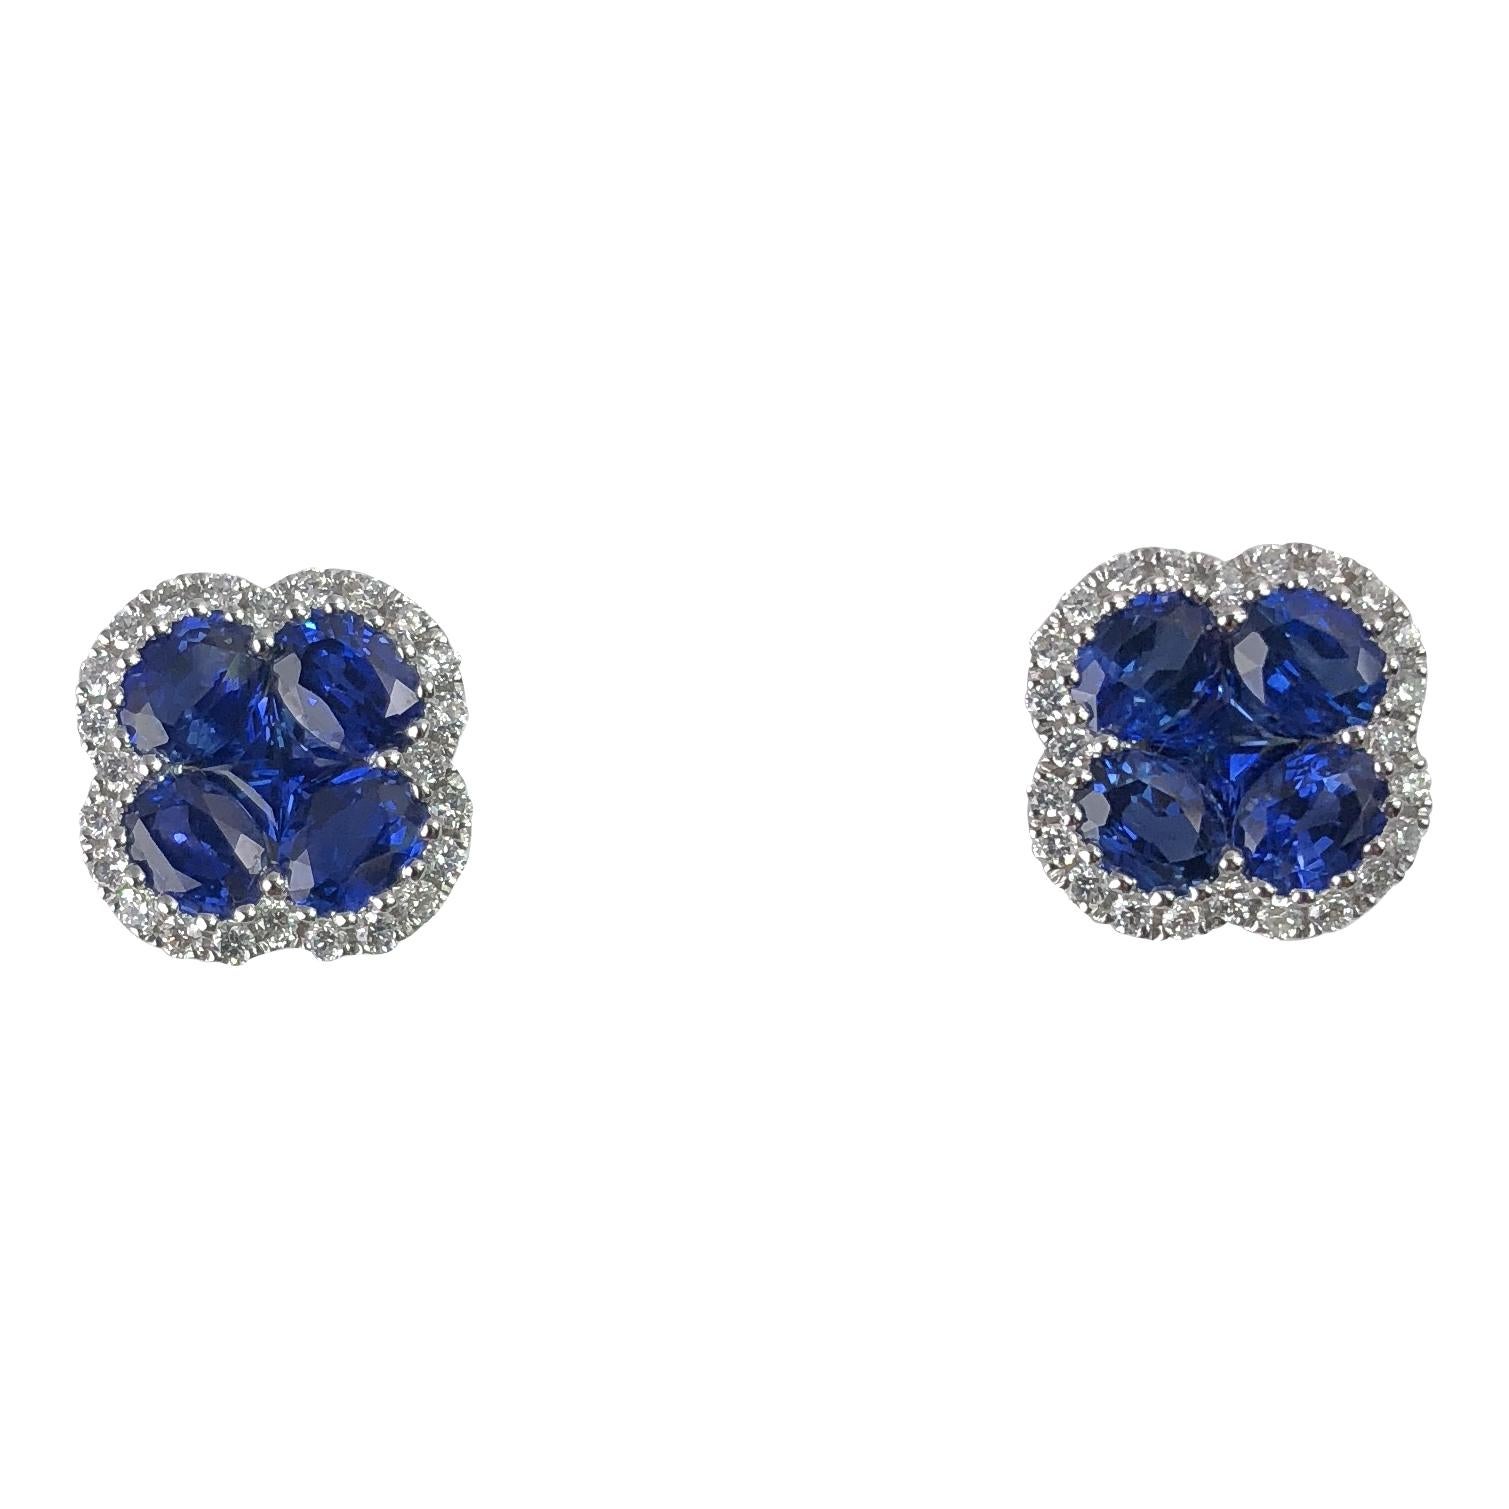 1.92 Carat Vivid Blue Sapphire and 0.23 Carat Diamond Clover Stud Earrings